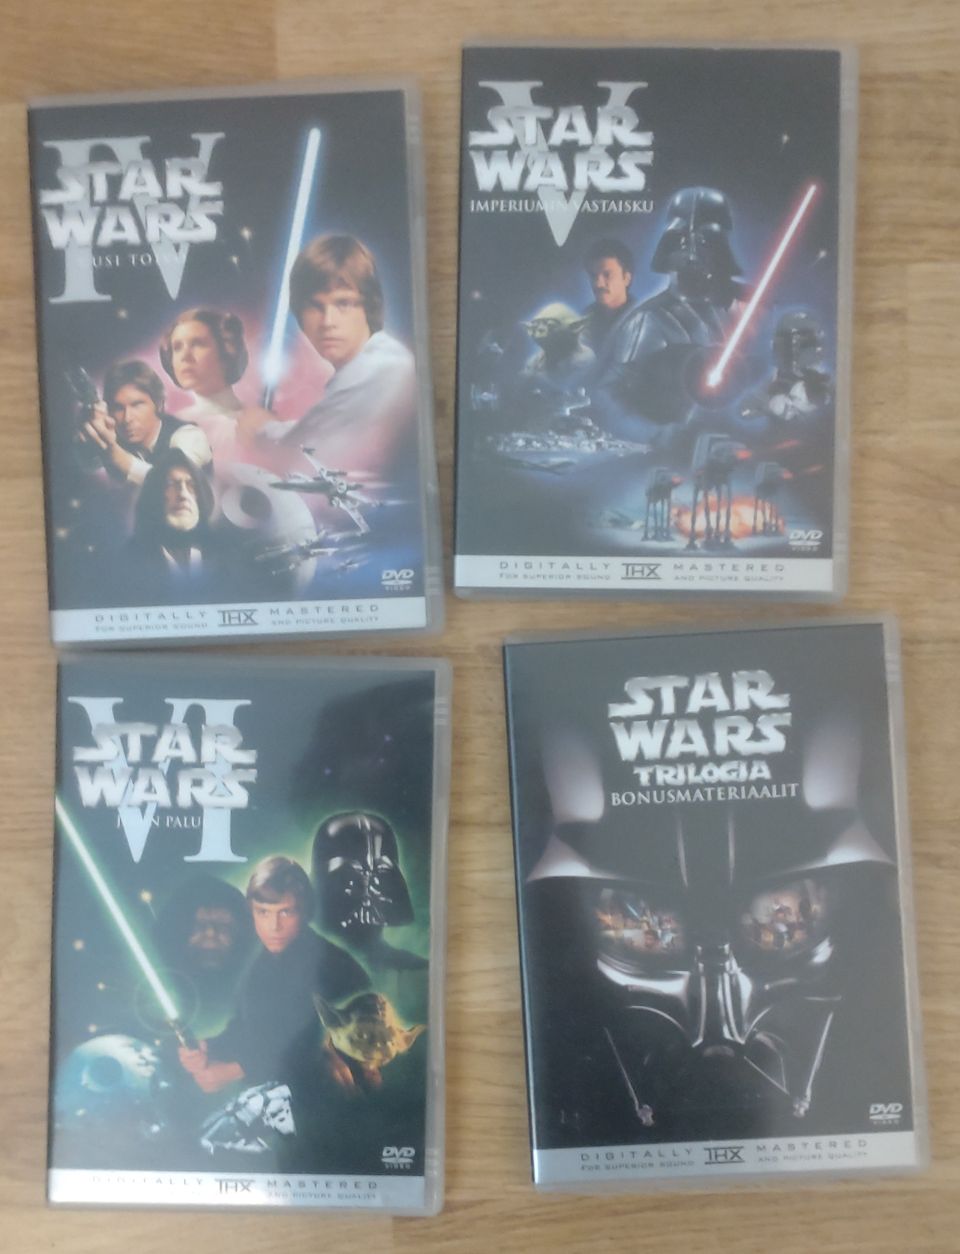 Star Wars episodi IV-VI + bonusmateriaalit DVD-setti